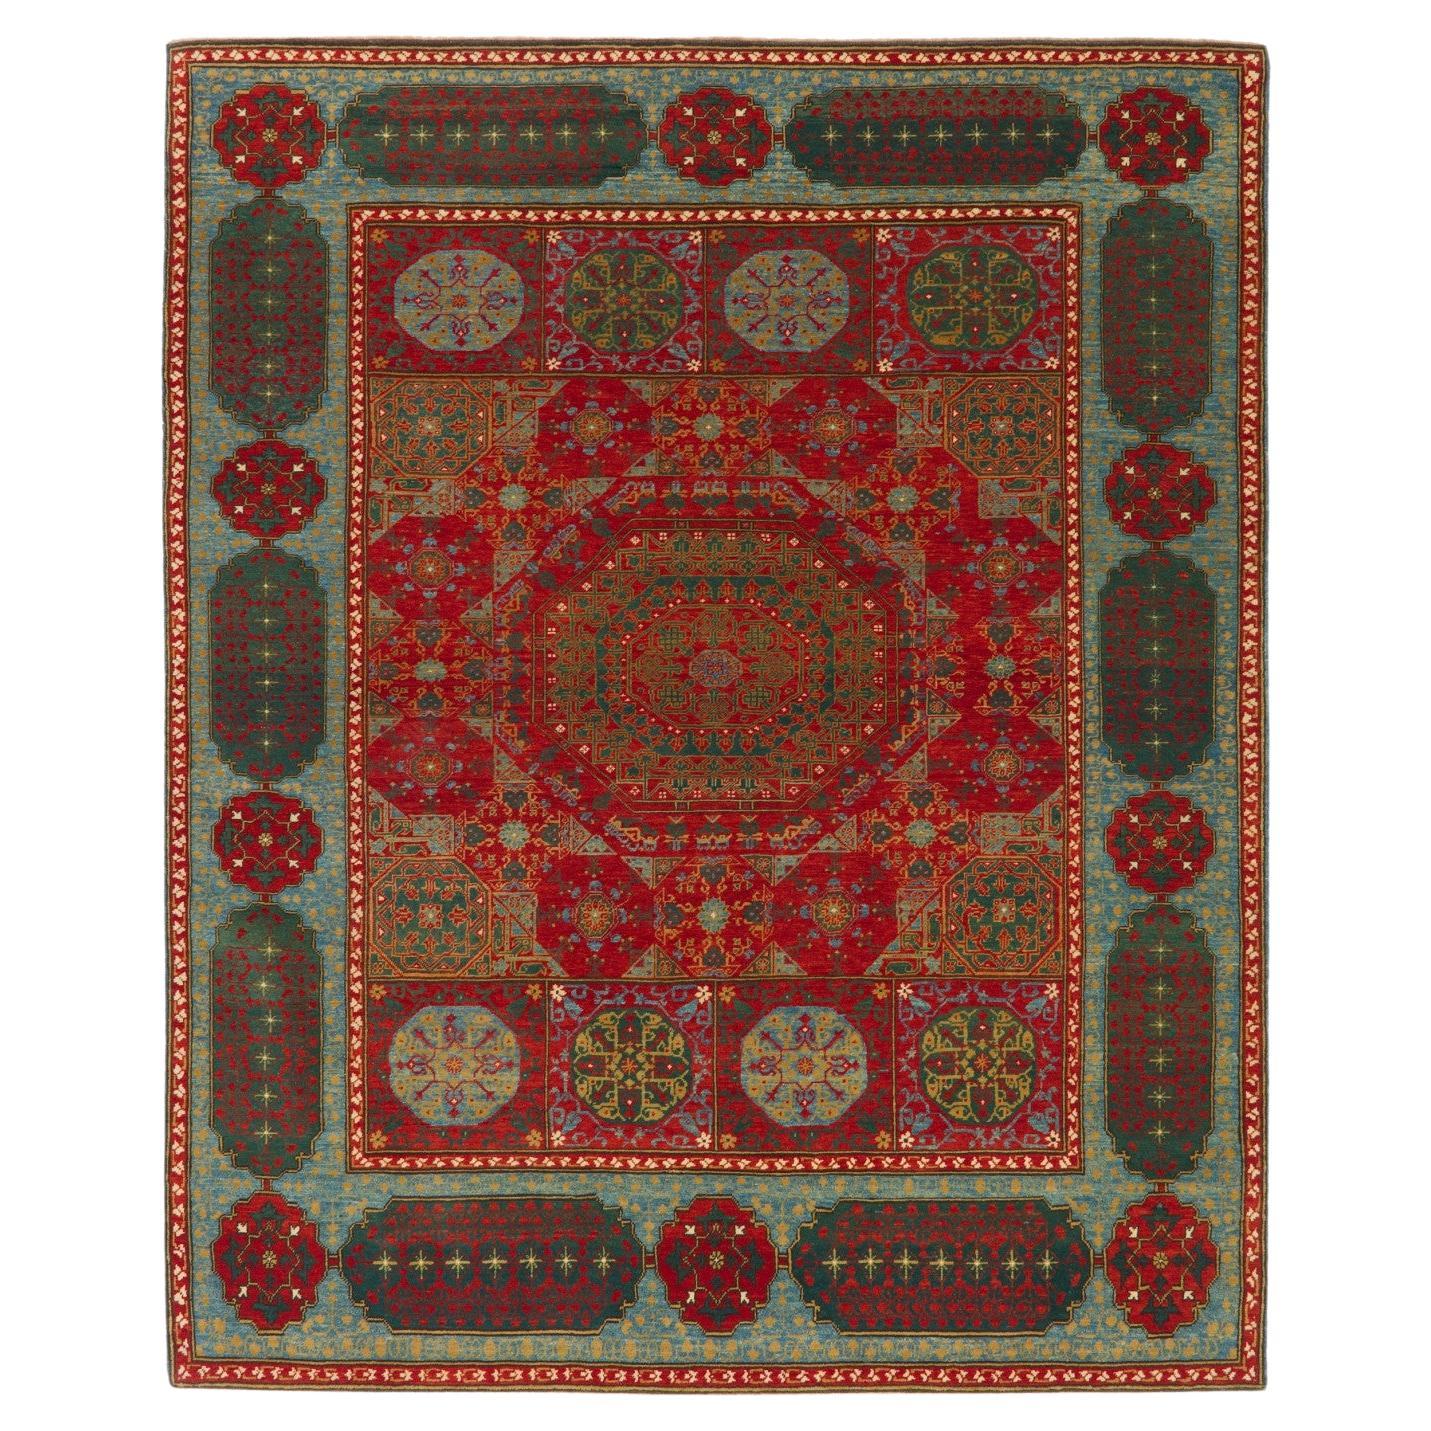 Ararat Rugs The Simonetti Mamluk Carpet 16th C. Revival Rug, Square Natural Dyed For Sale